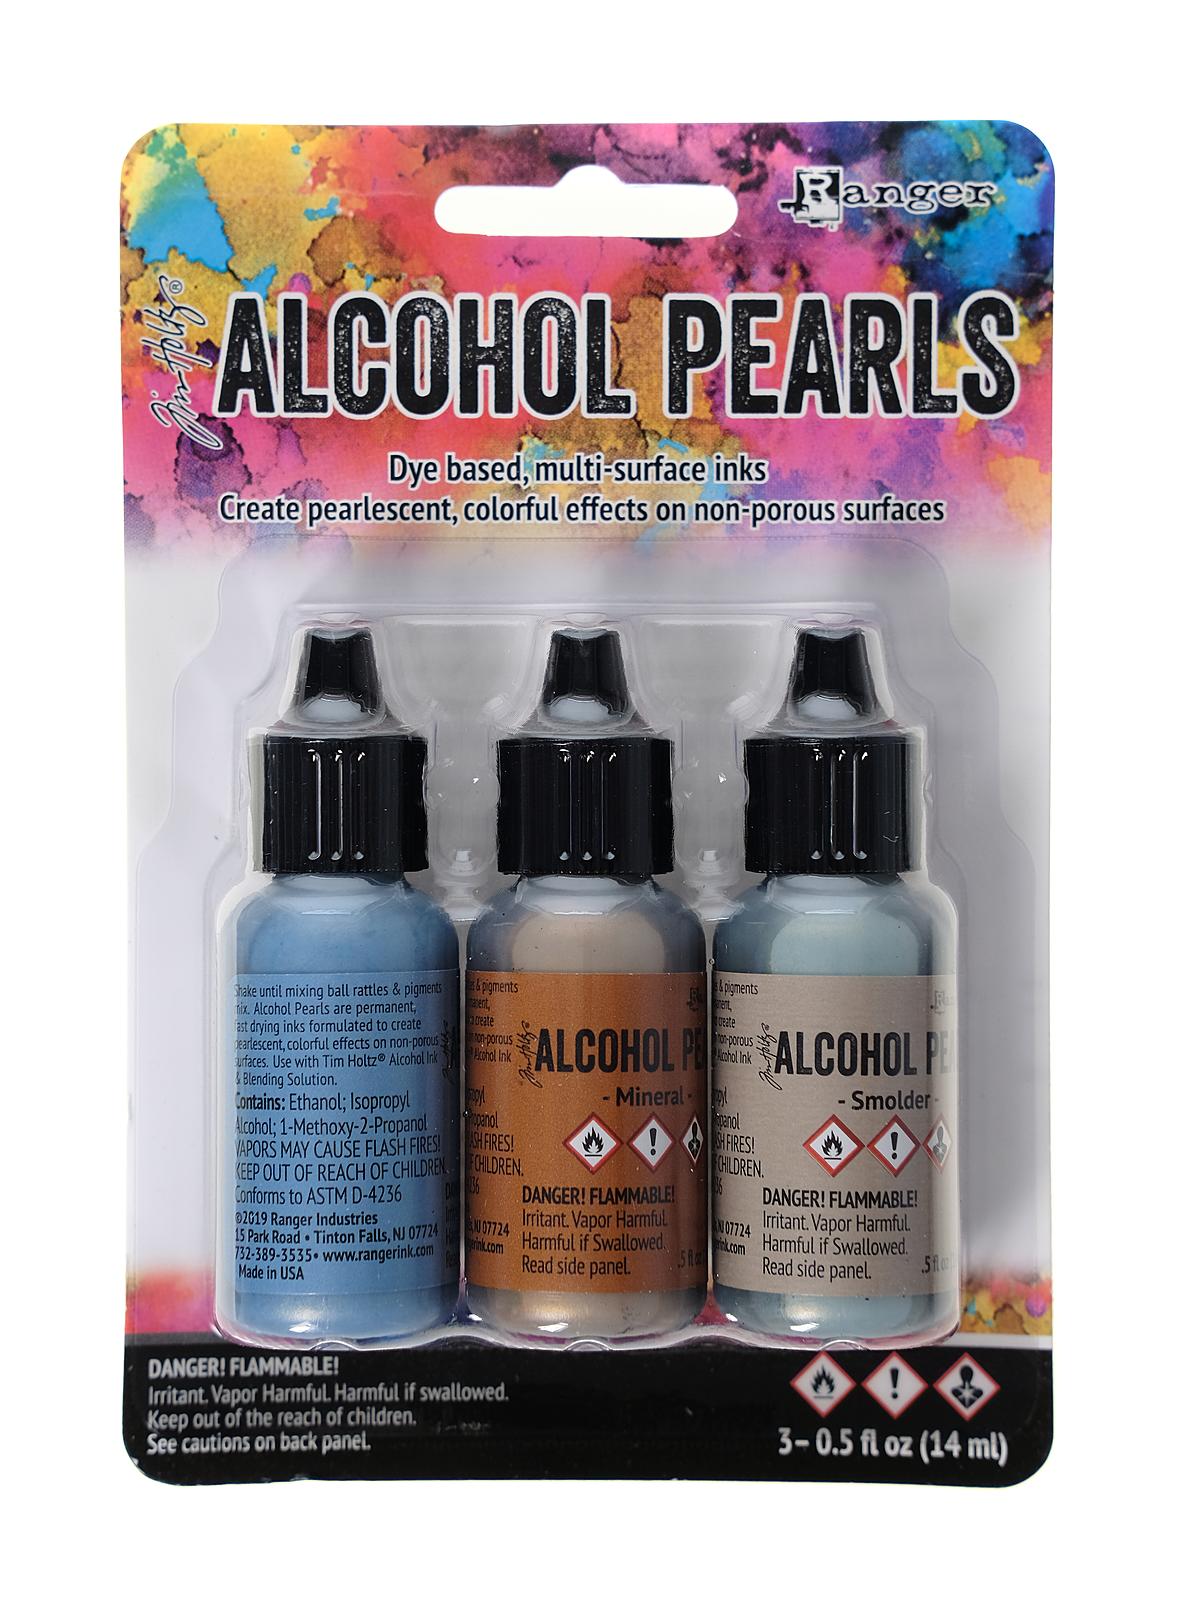 Tim Holtz Alcohol Pearl Kits #4 Celestial, Mineral, Smolder